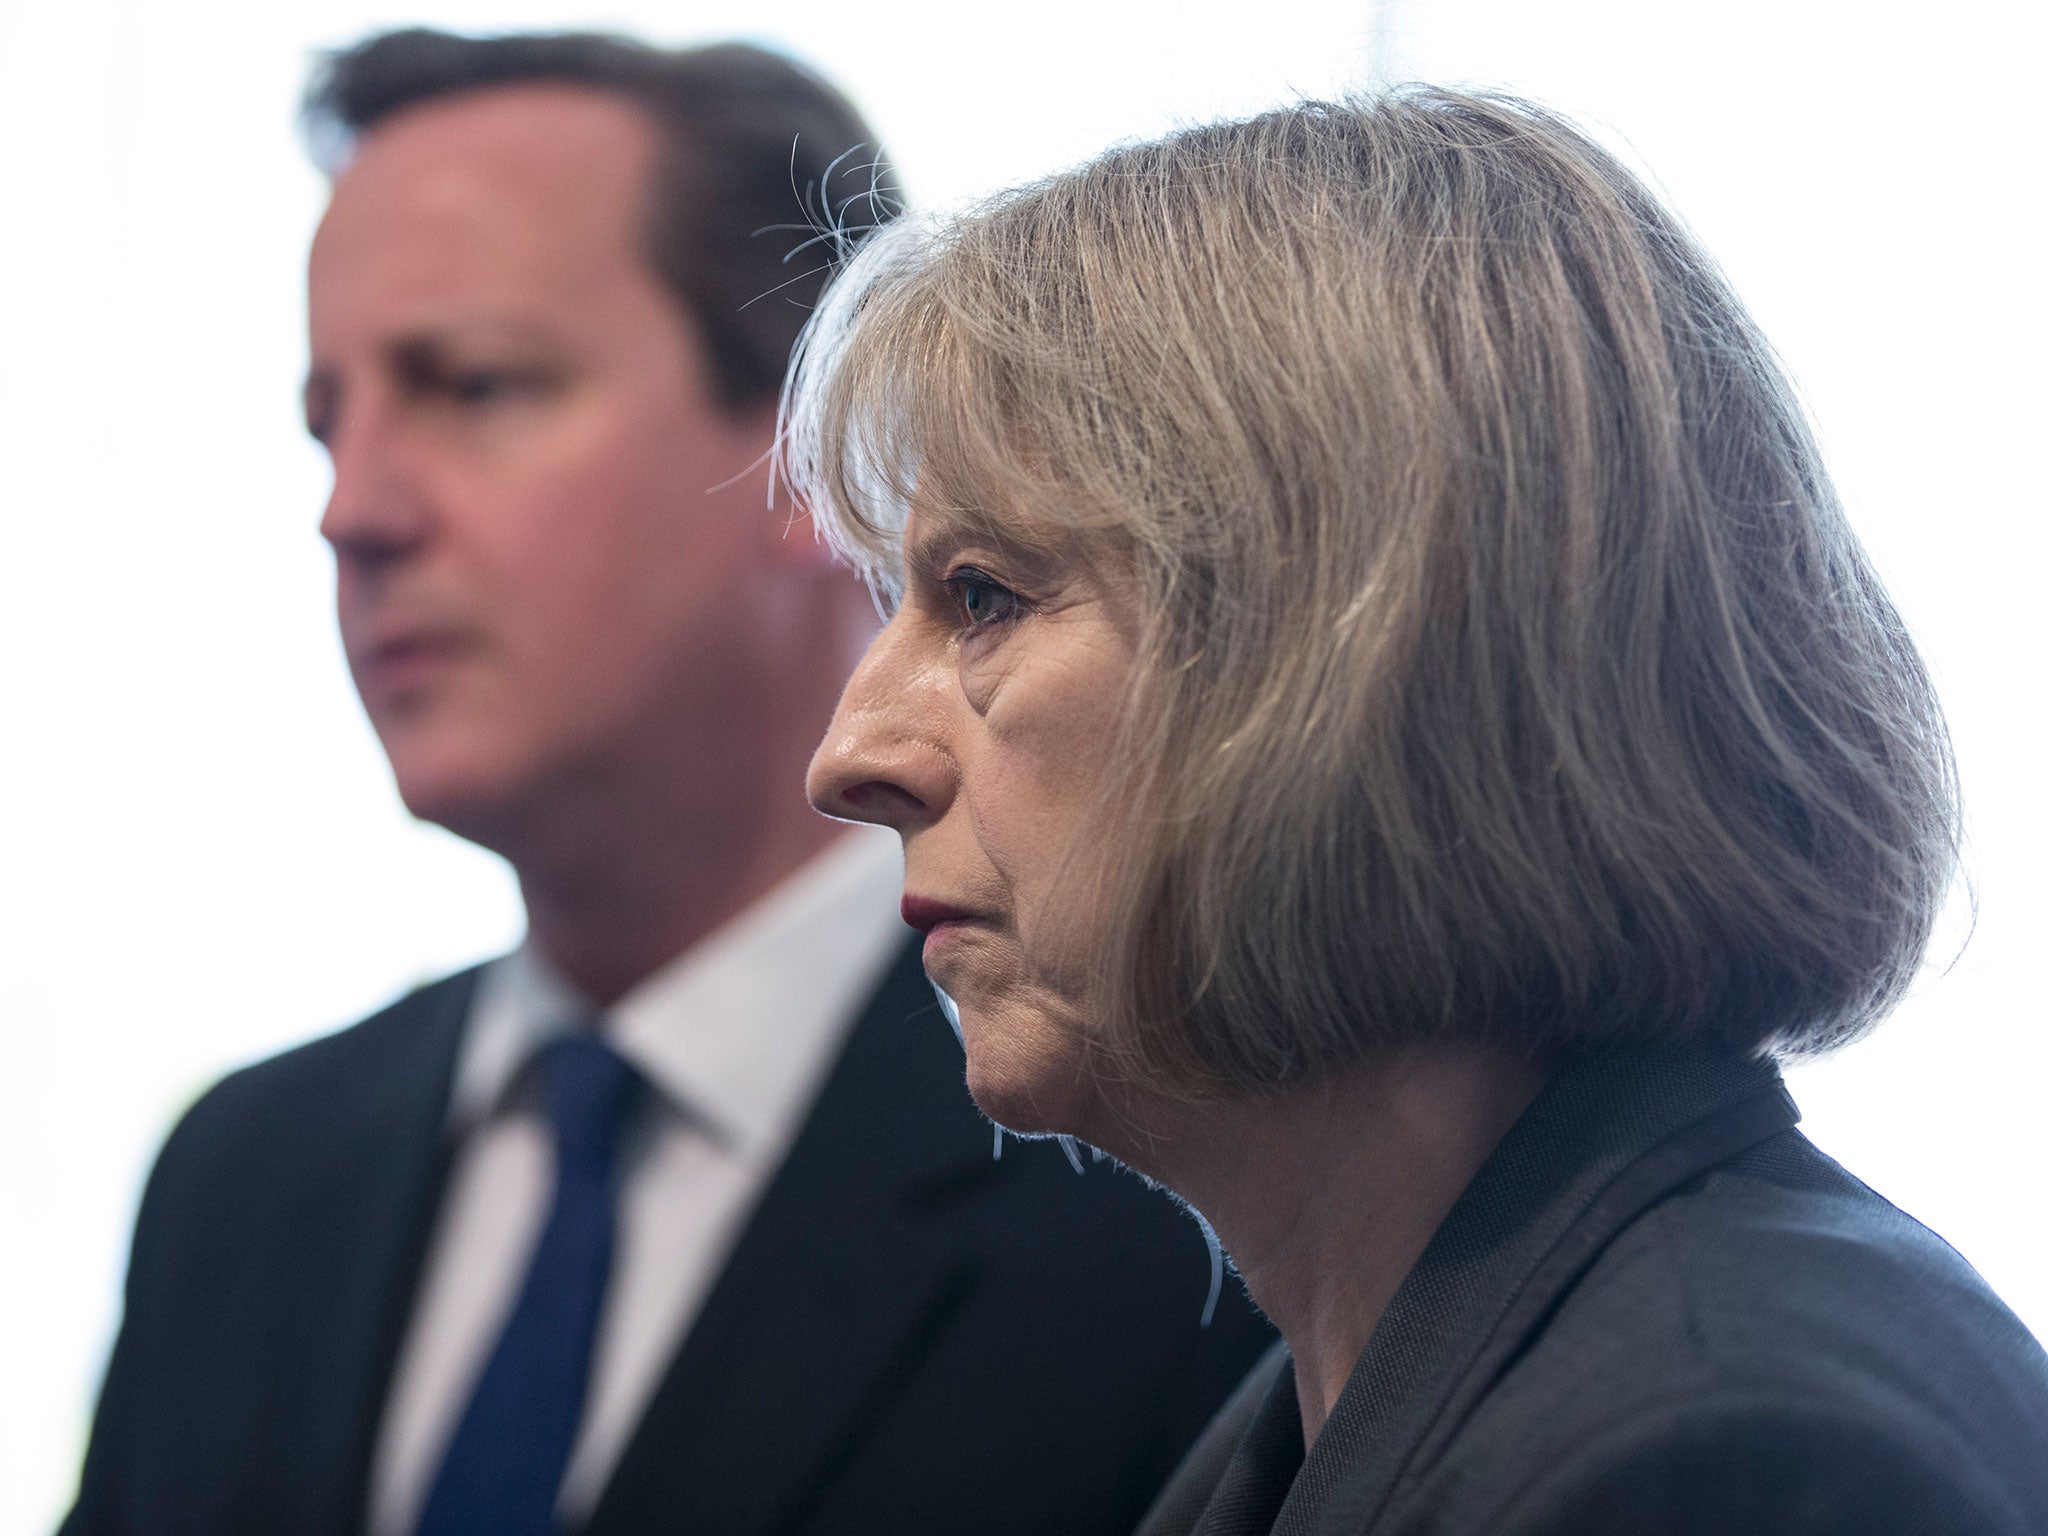 Prime Minister David Cameron and Home Secretary Theresa May